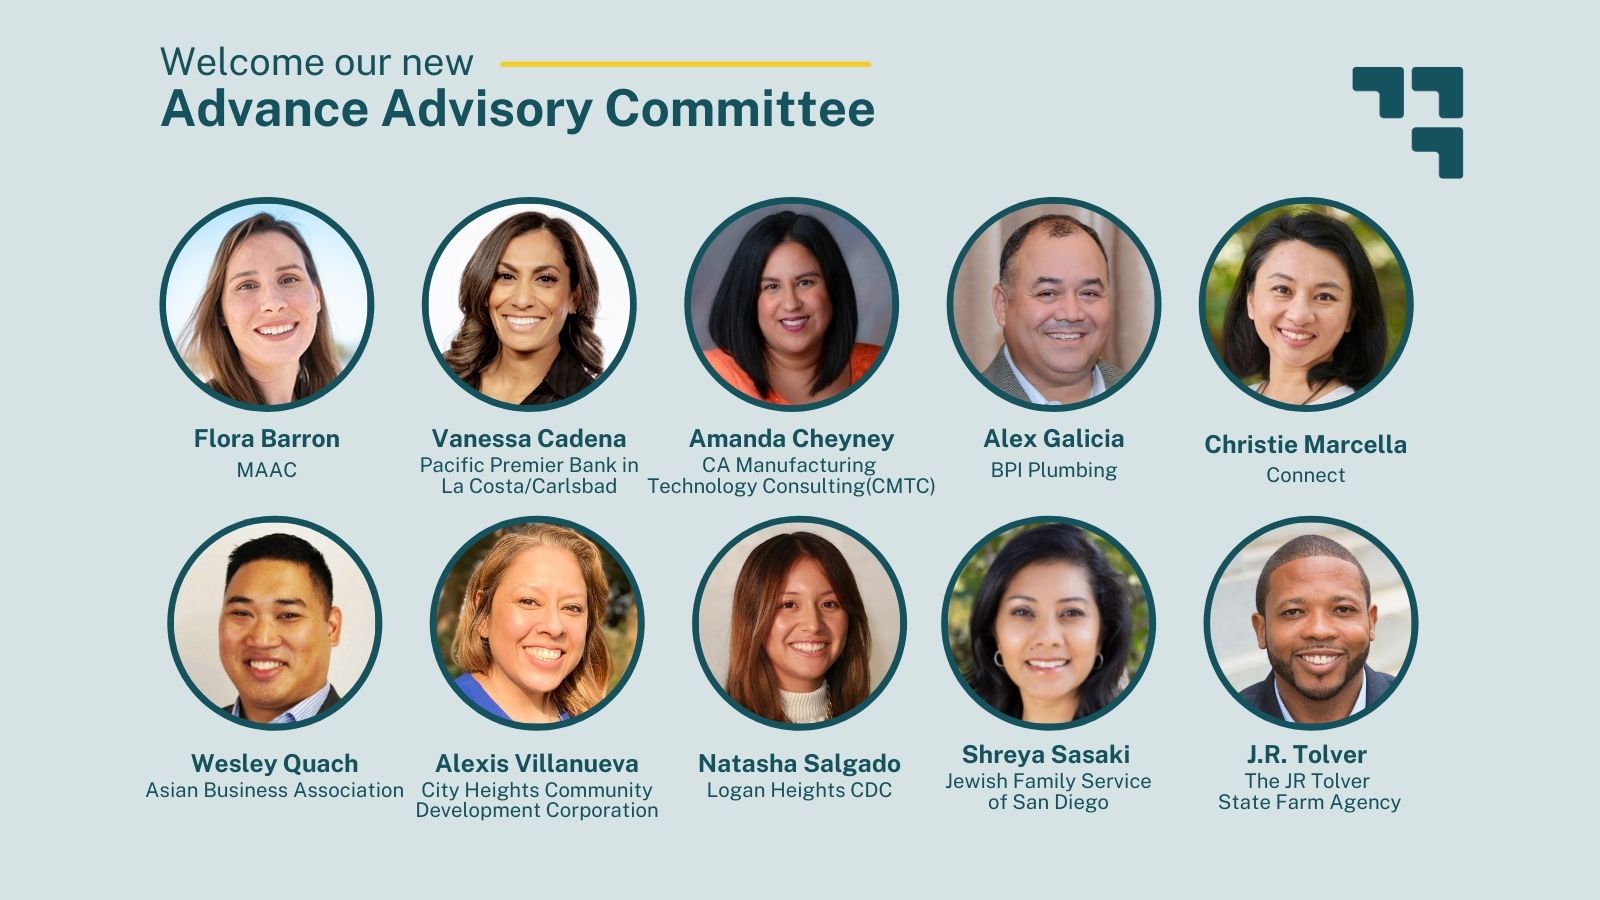 Advance Advisory Committee members